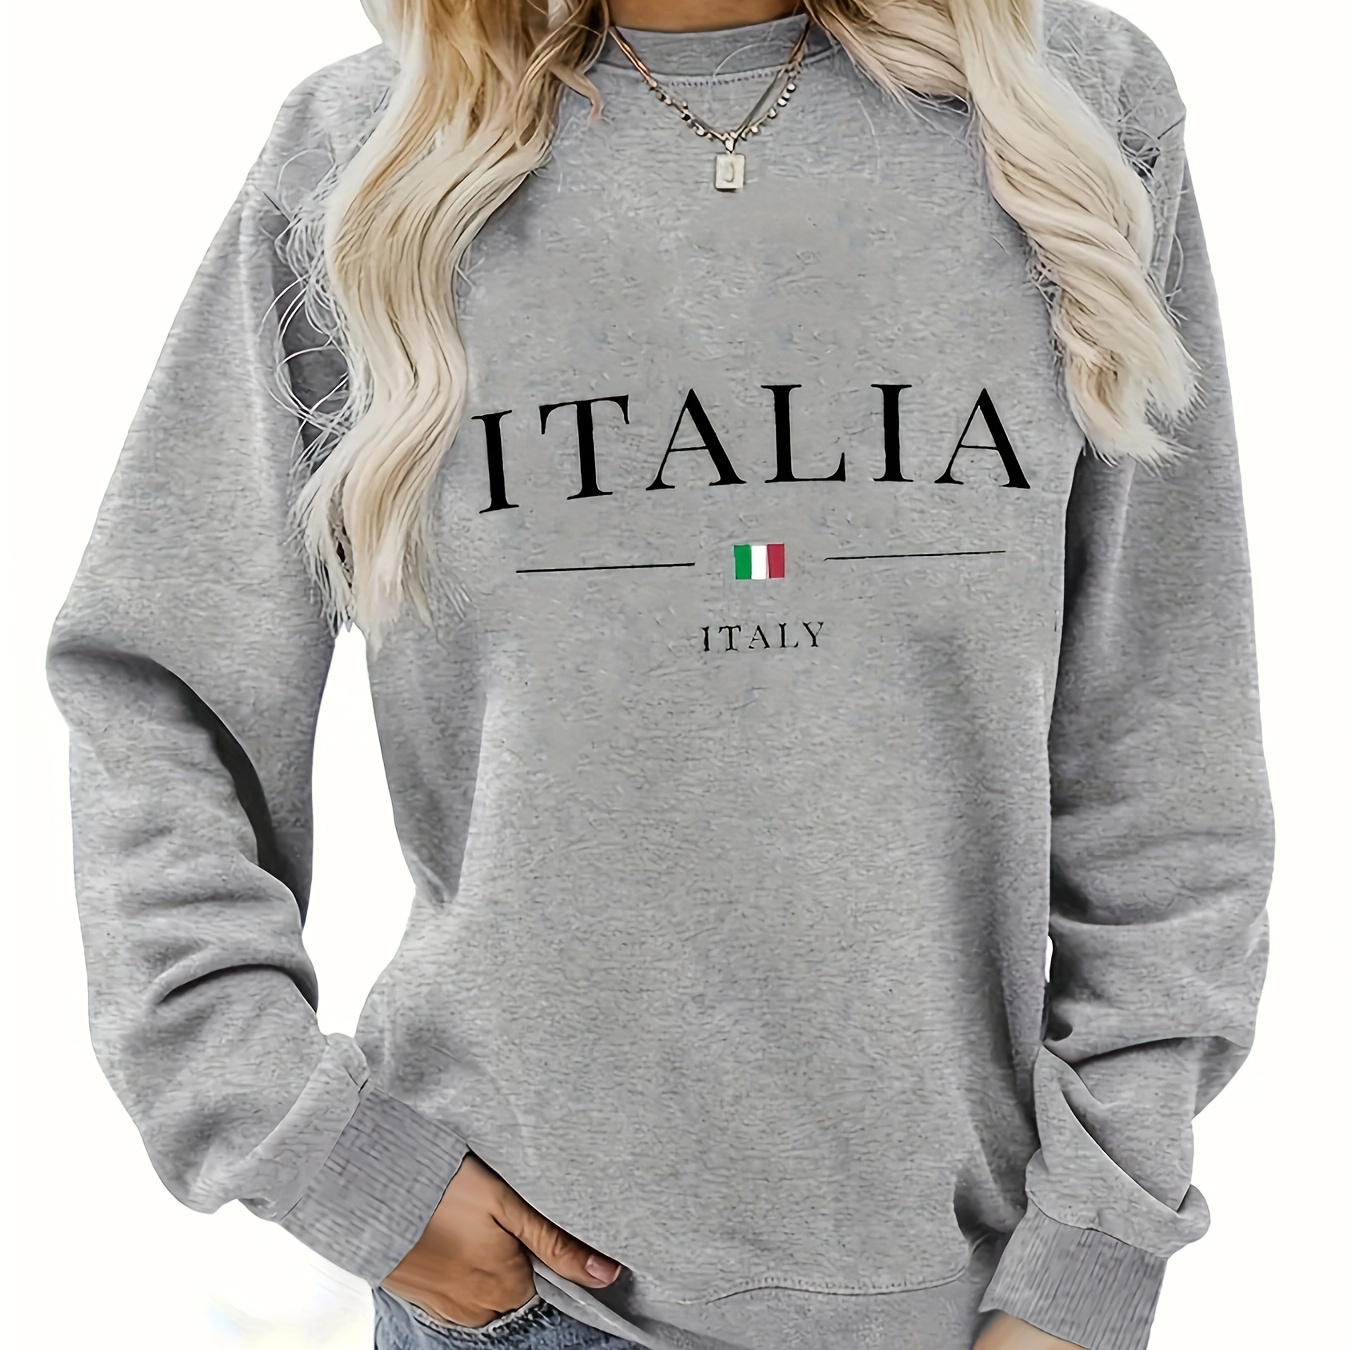 

Italia Print Pullover Sweatshirt, Casual Long Sleeve Crew Neck Sweatshirt For Fall & Winter, Women's Clothing